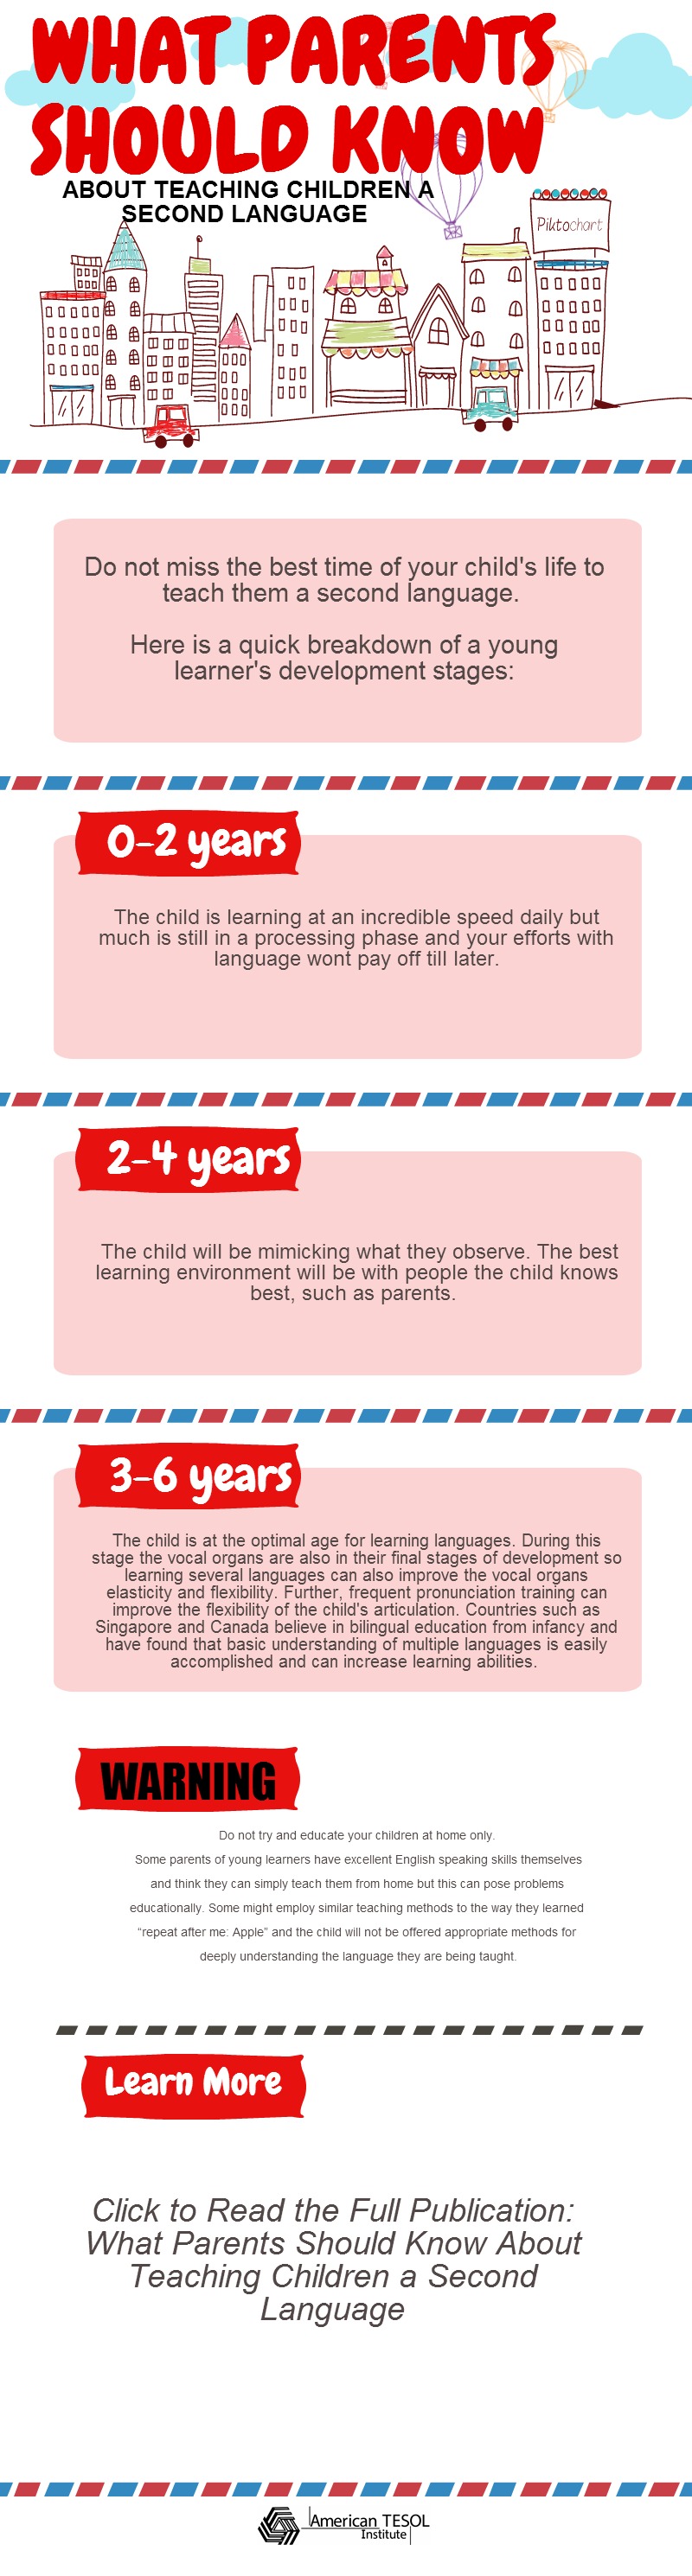 What Parents Should Know About Teaching Children a Second Language